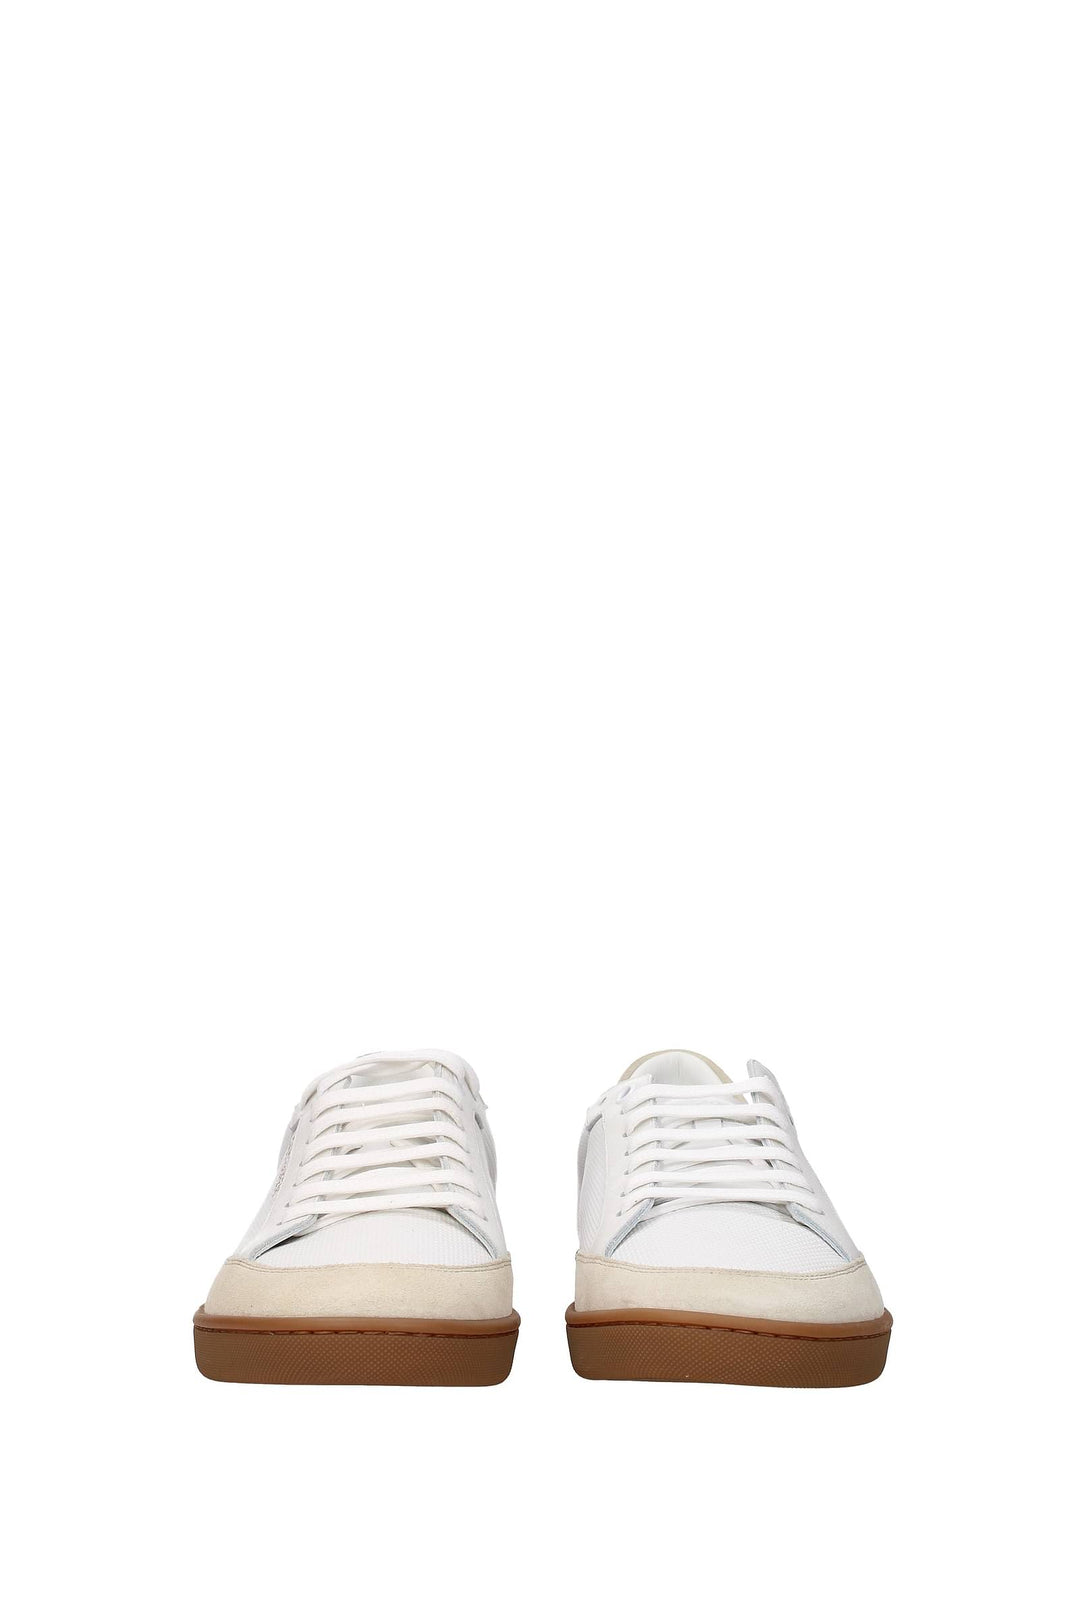 Sneakers Pelle Bianco - Saint Laurent - Uomo